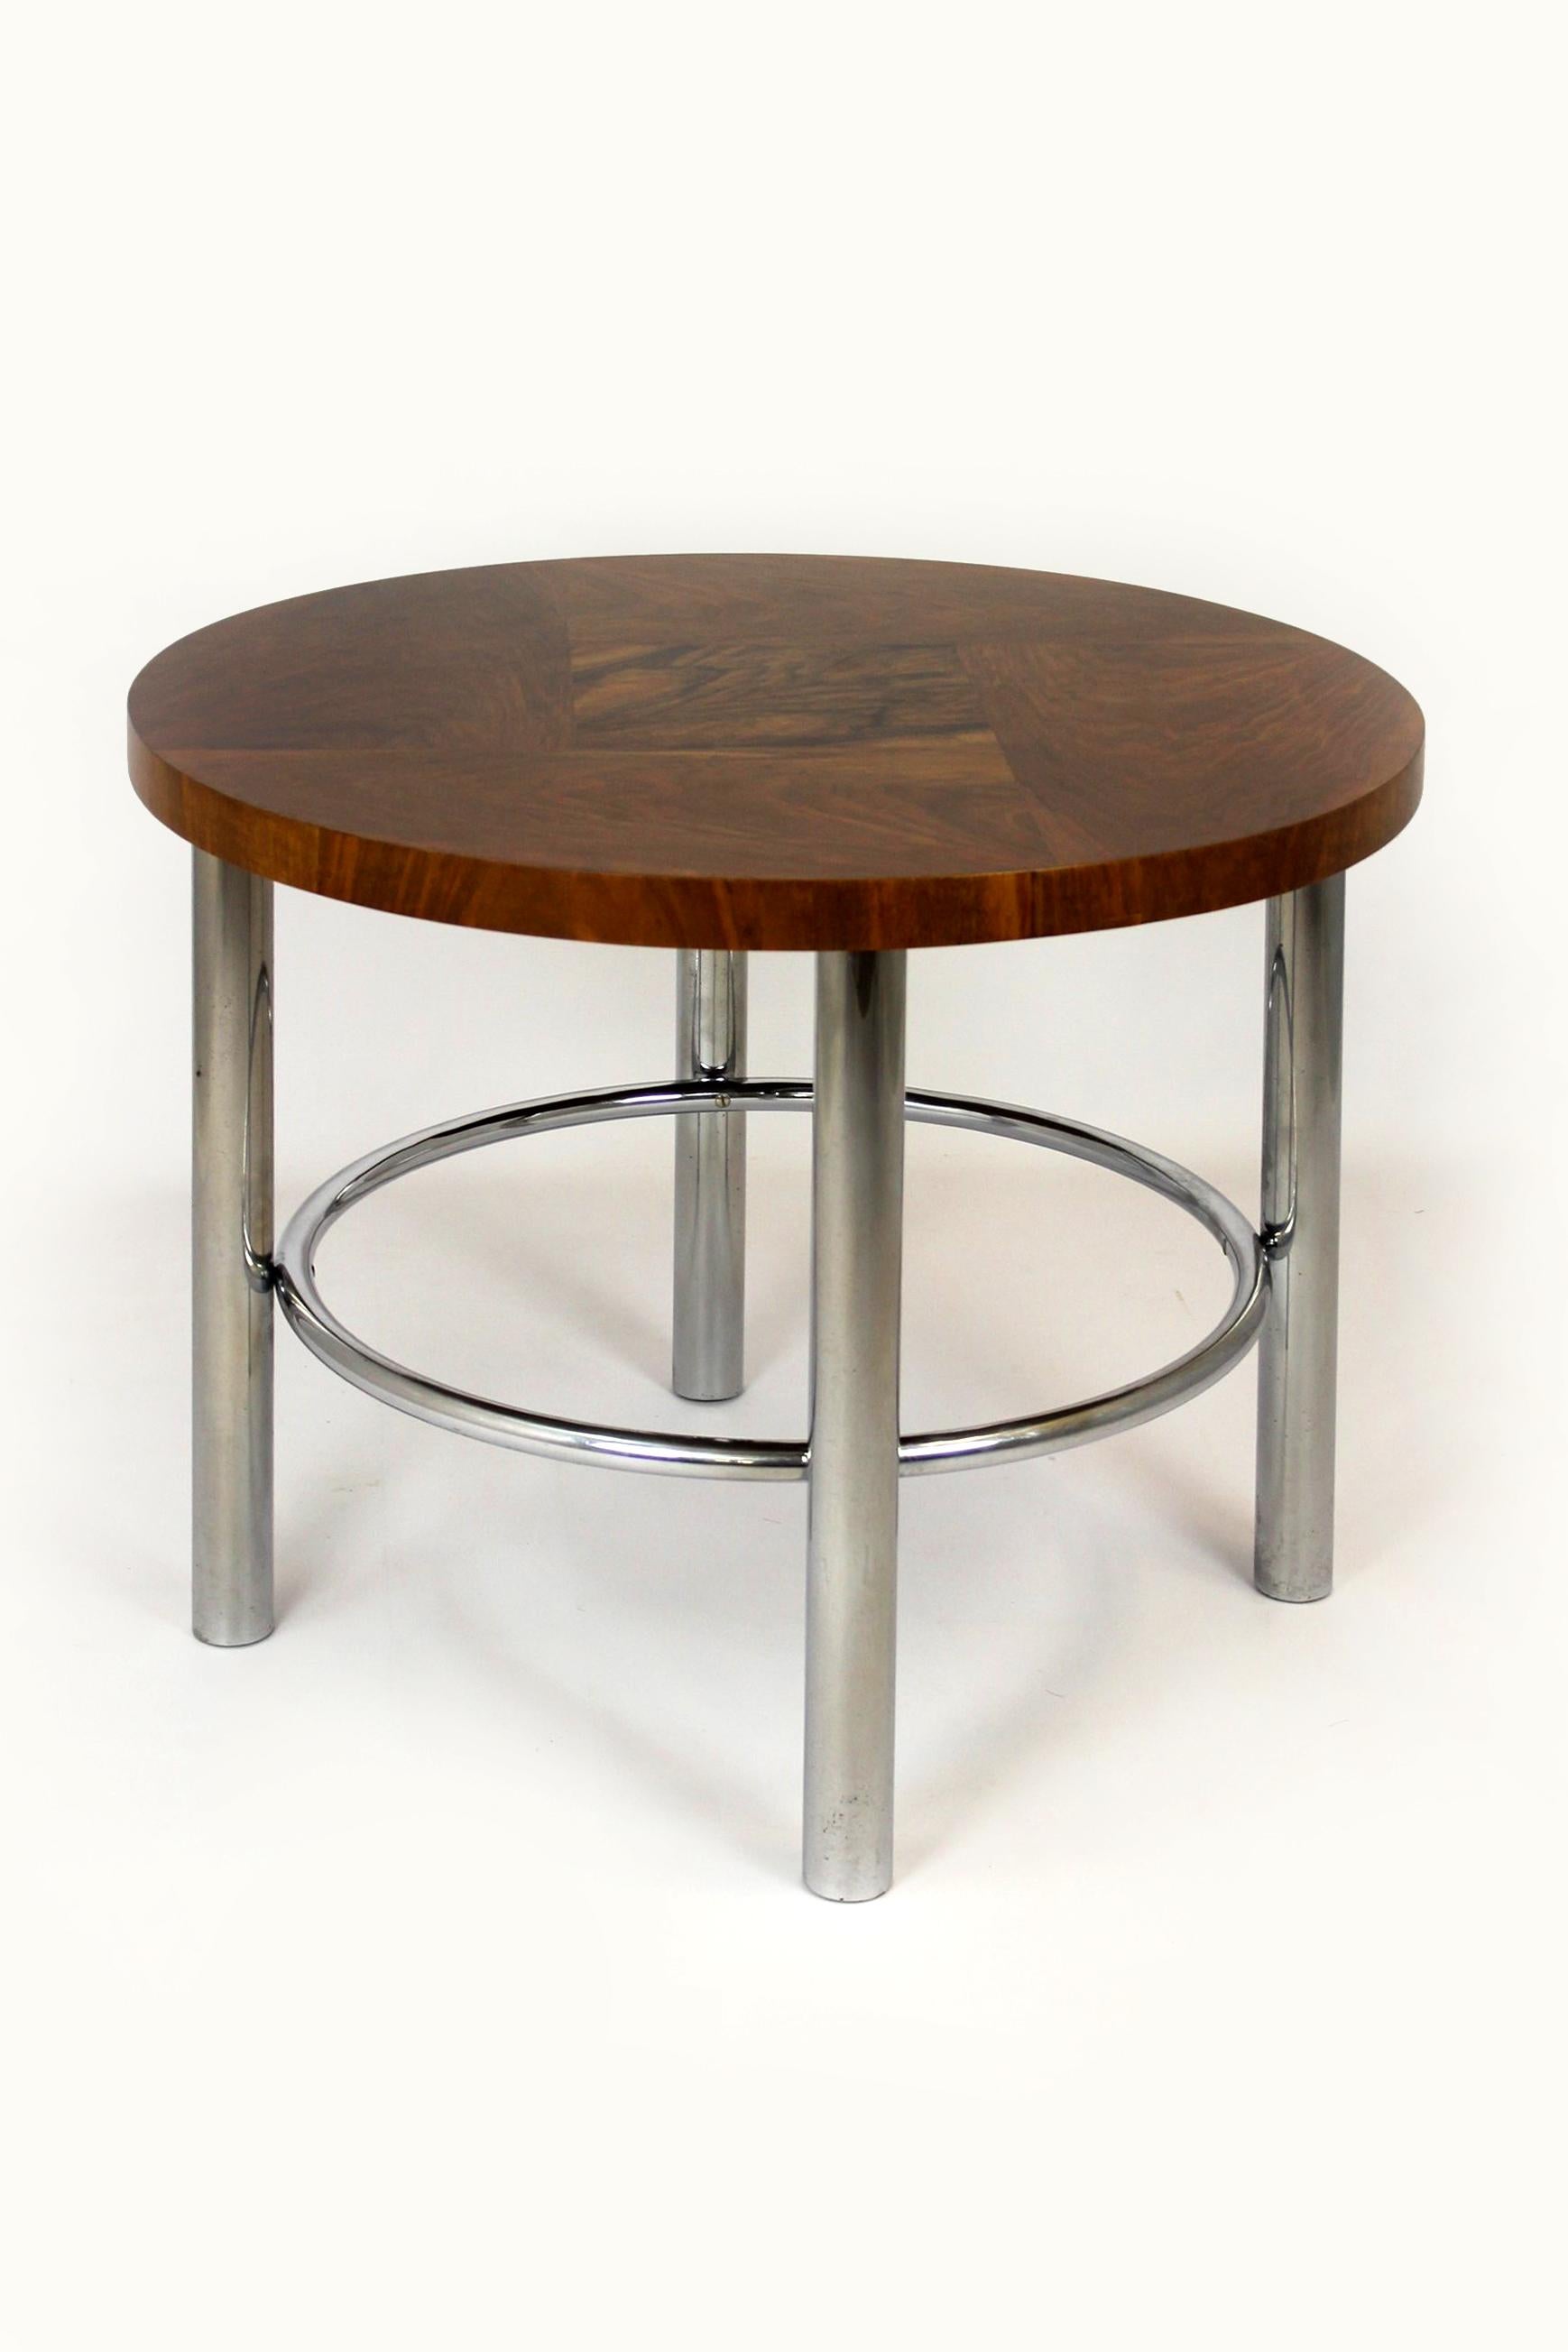 Bauhaus Round Table in Walnut by Robert Slezak, 1930s For Sale 5